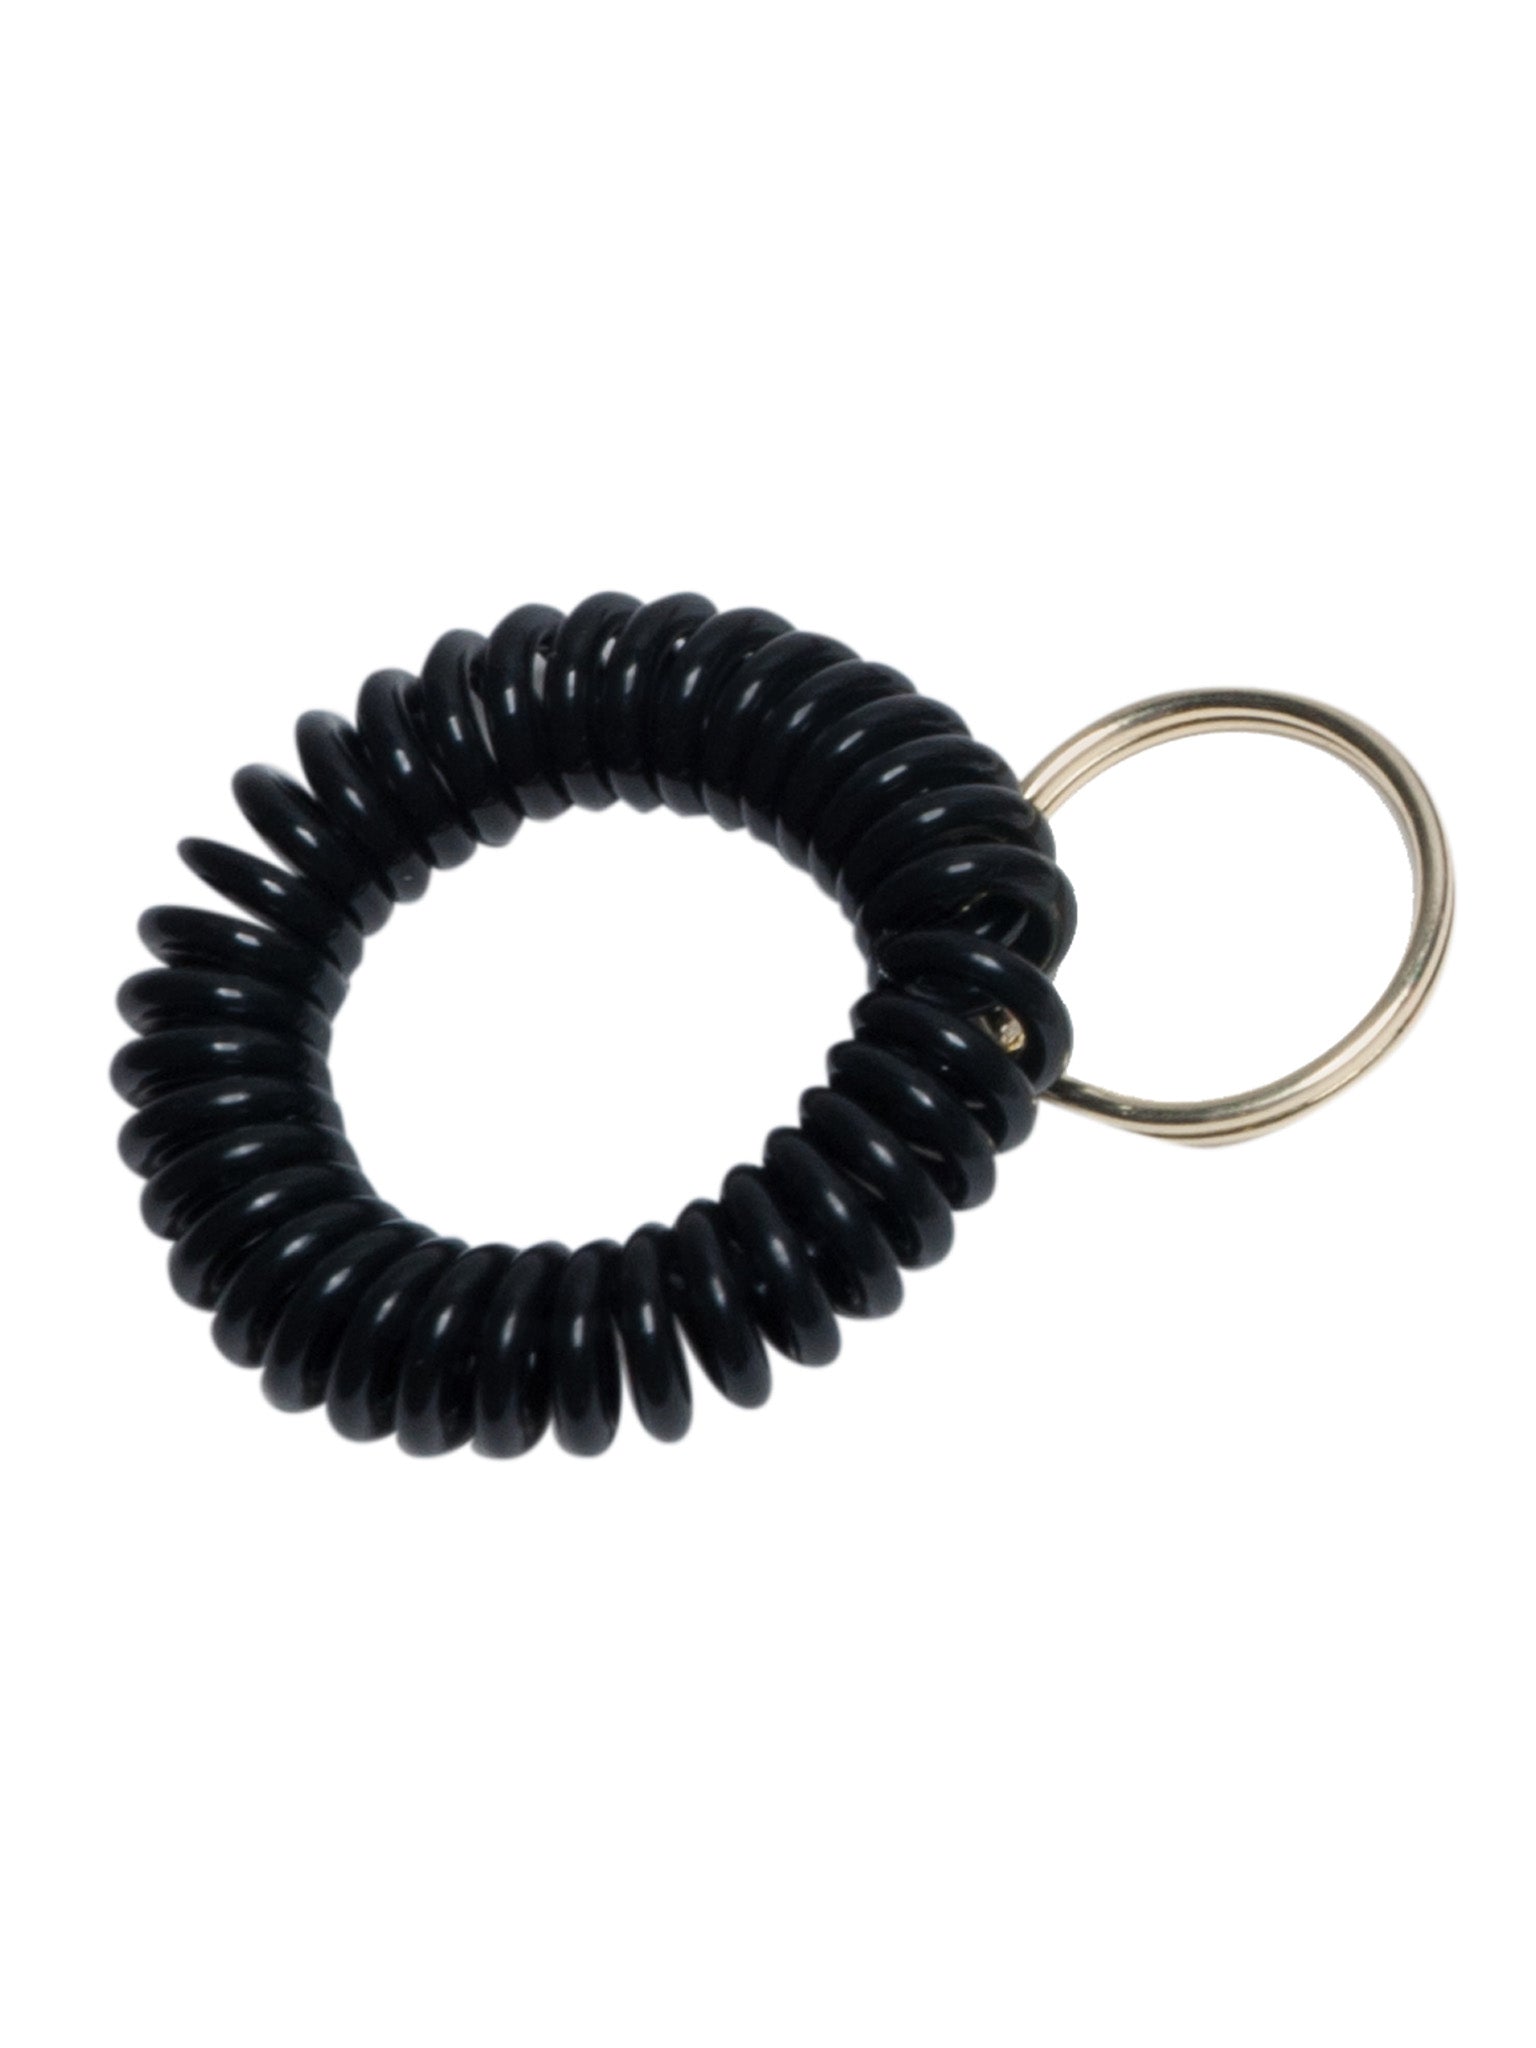 Spiral Bracelets For Whistle - Black